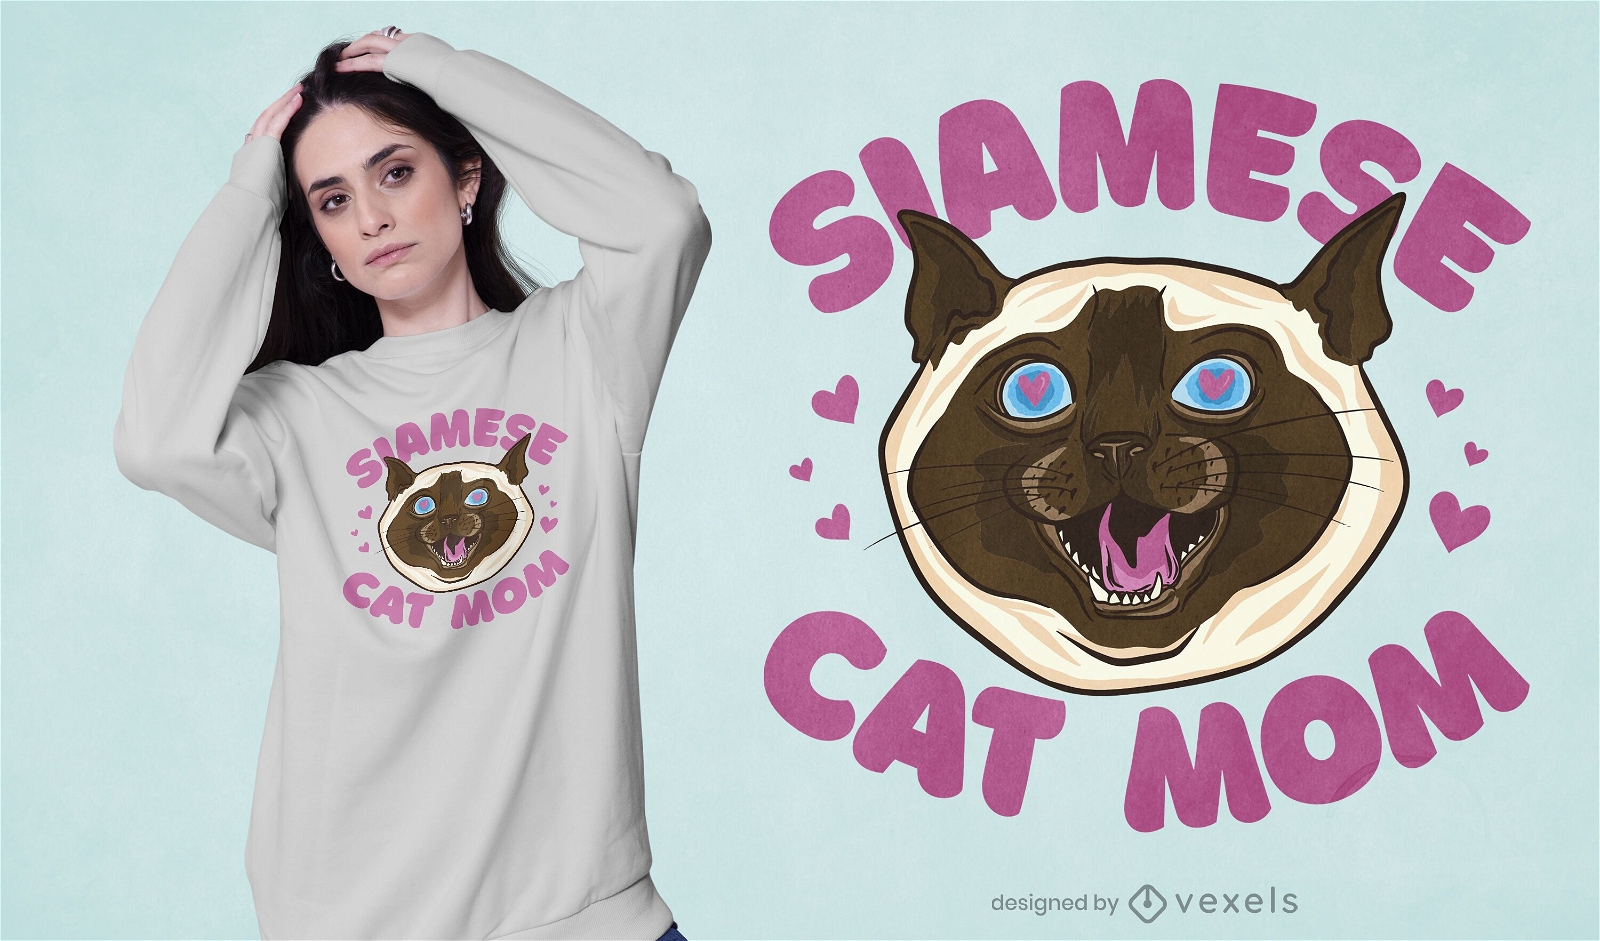 Siamese cat mom t-shirt design